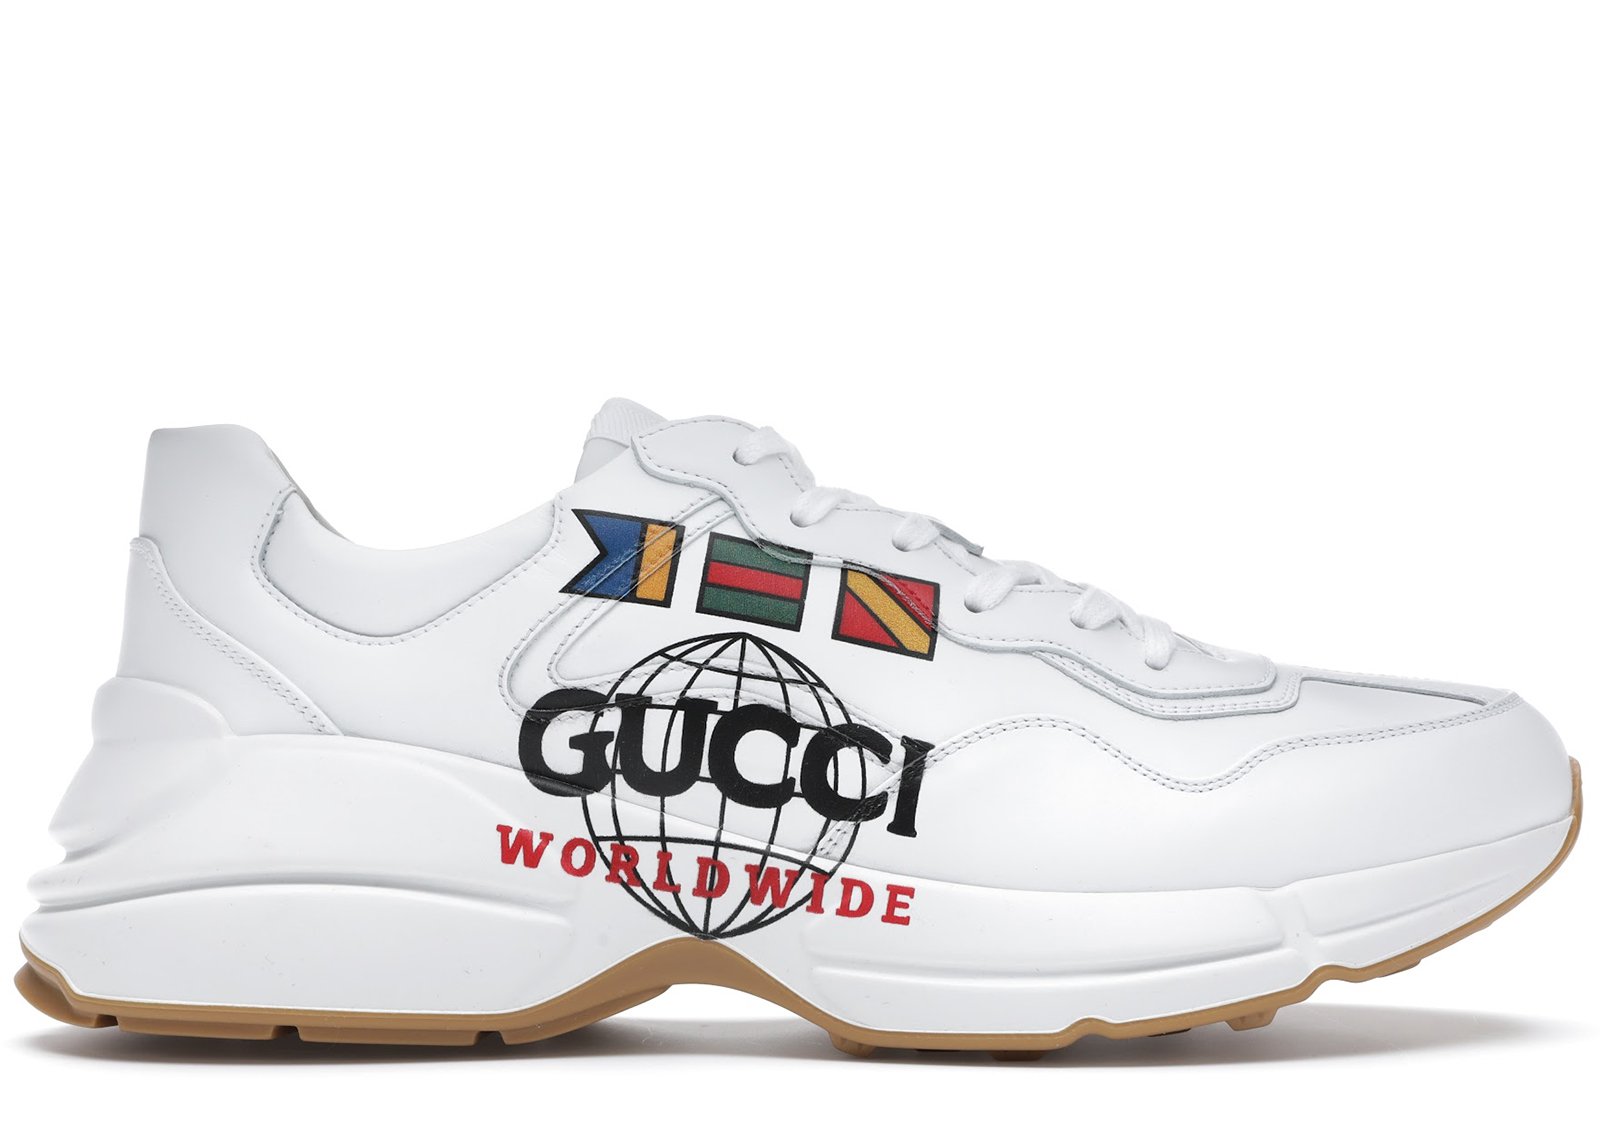 Gucci Rhyton Worldwide sneakers